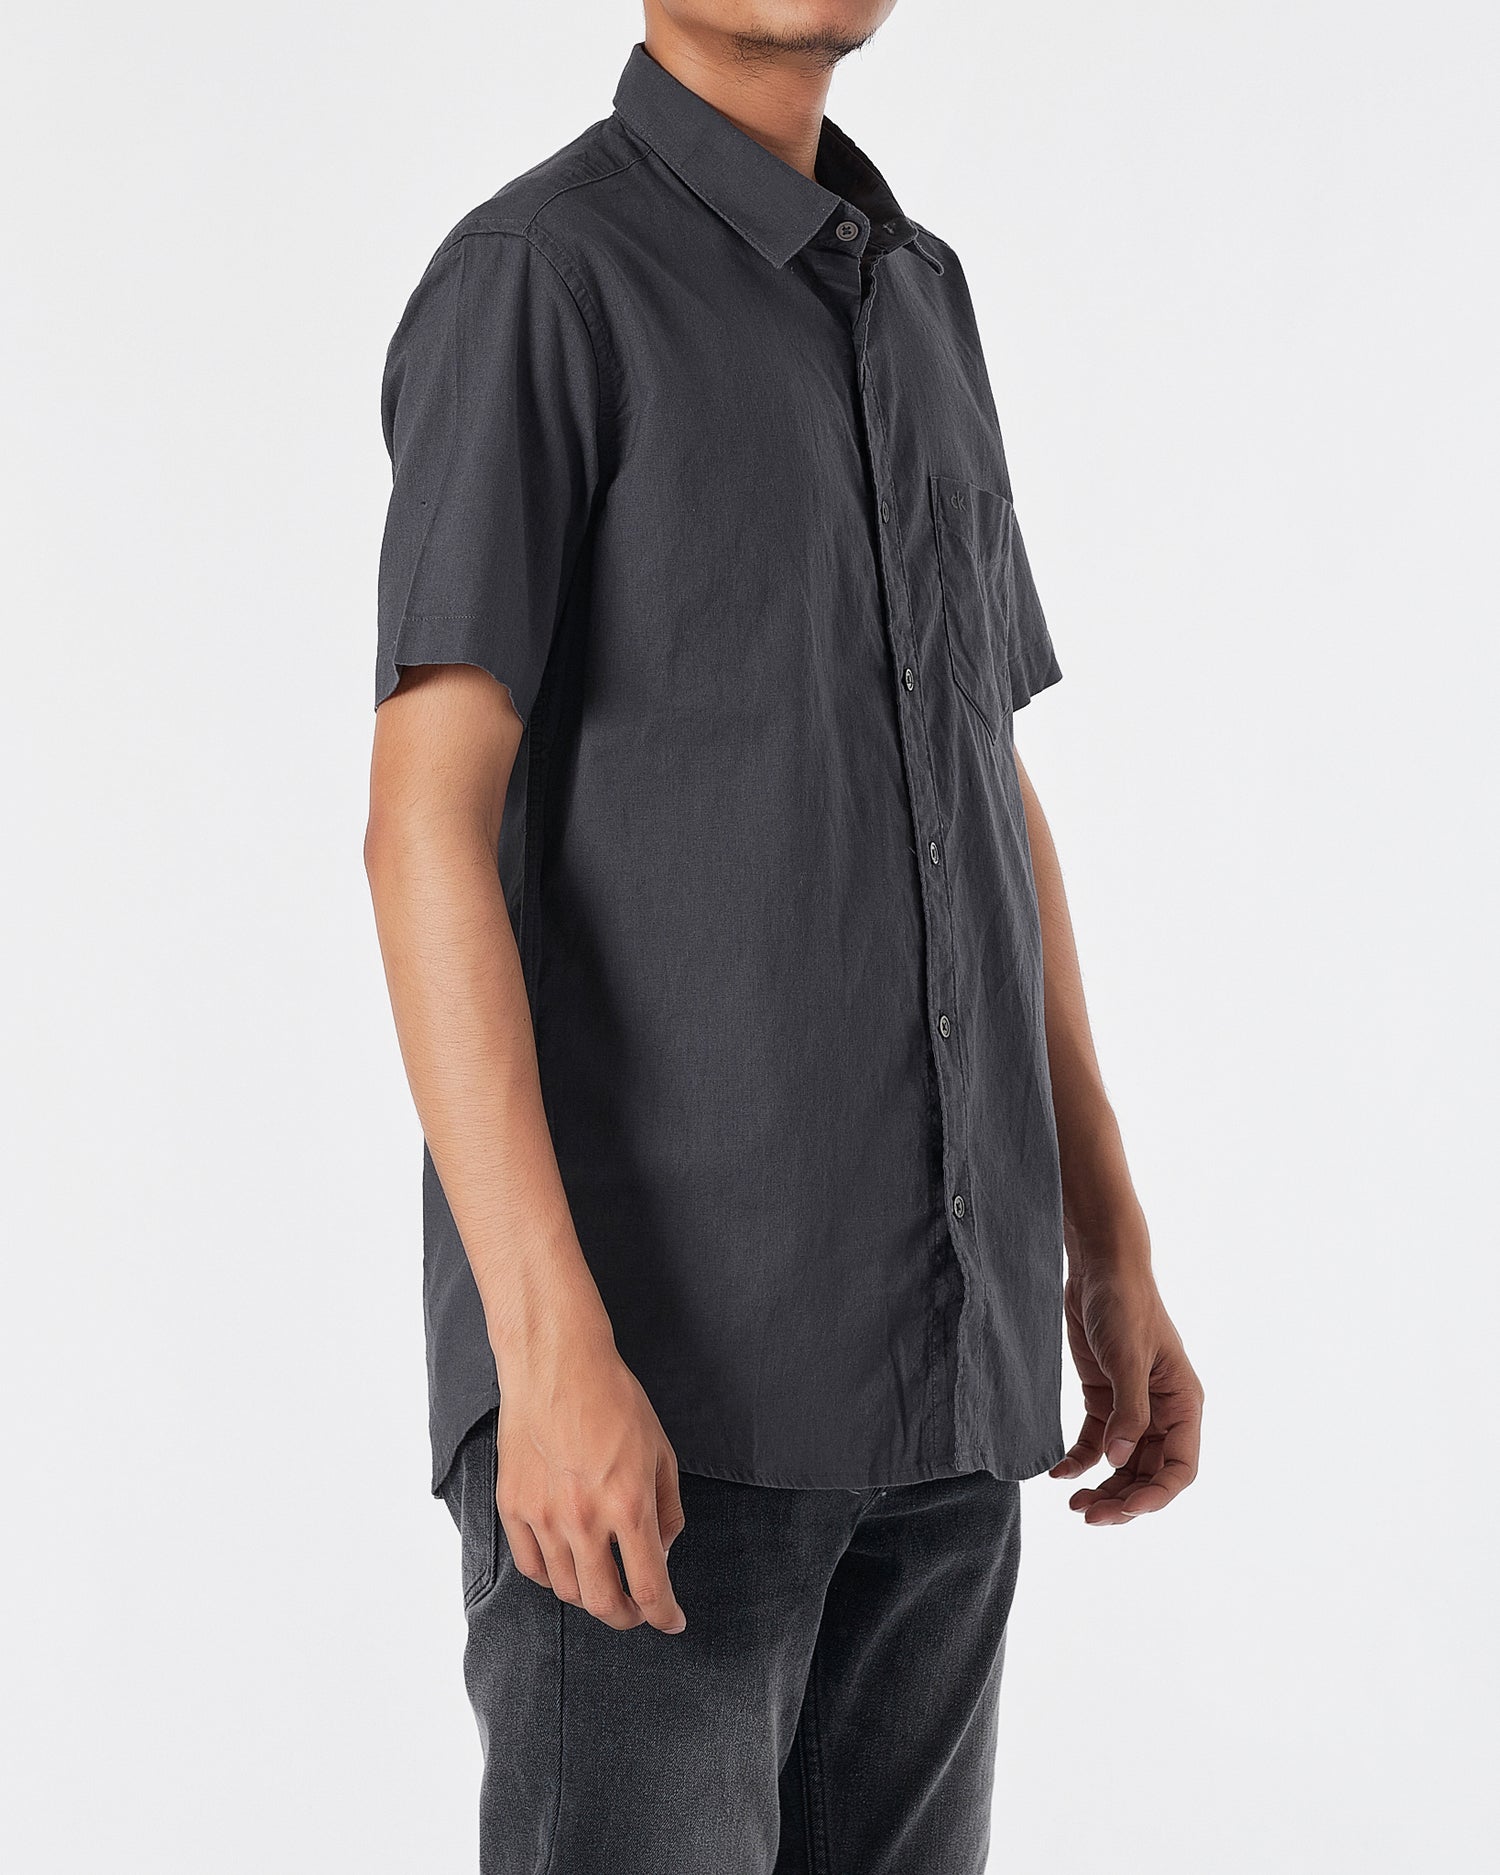 CK Linen Men Dark Grey Shirts Short Sleeve 20.90